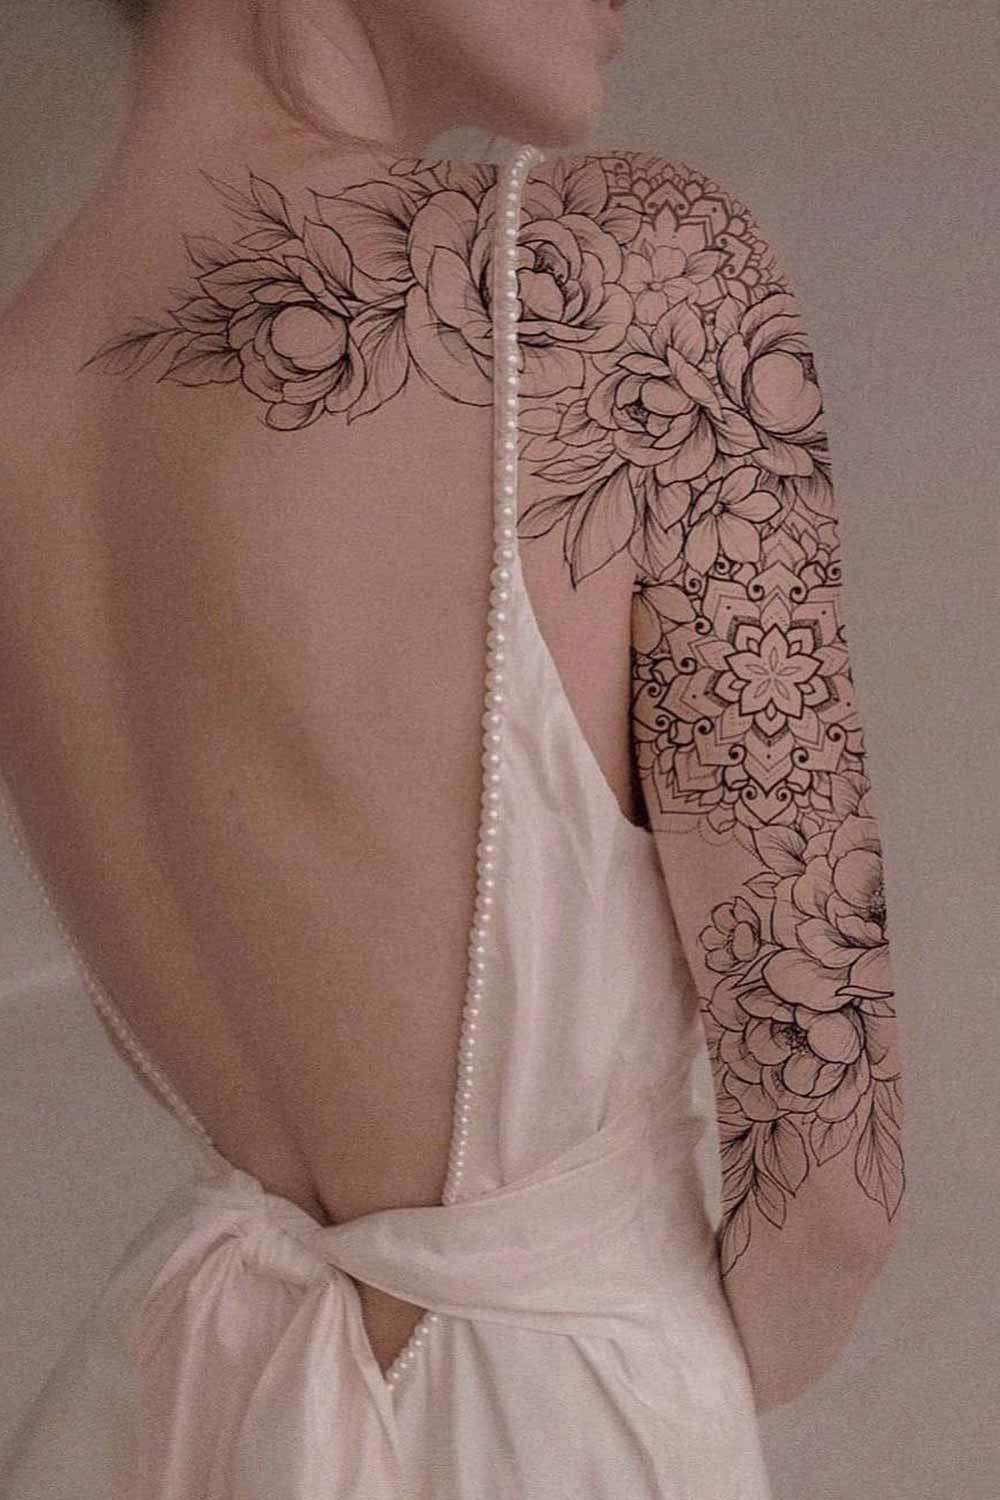 tatuagem-floral-no-braco-indo-pro-ombro 